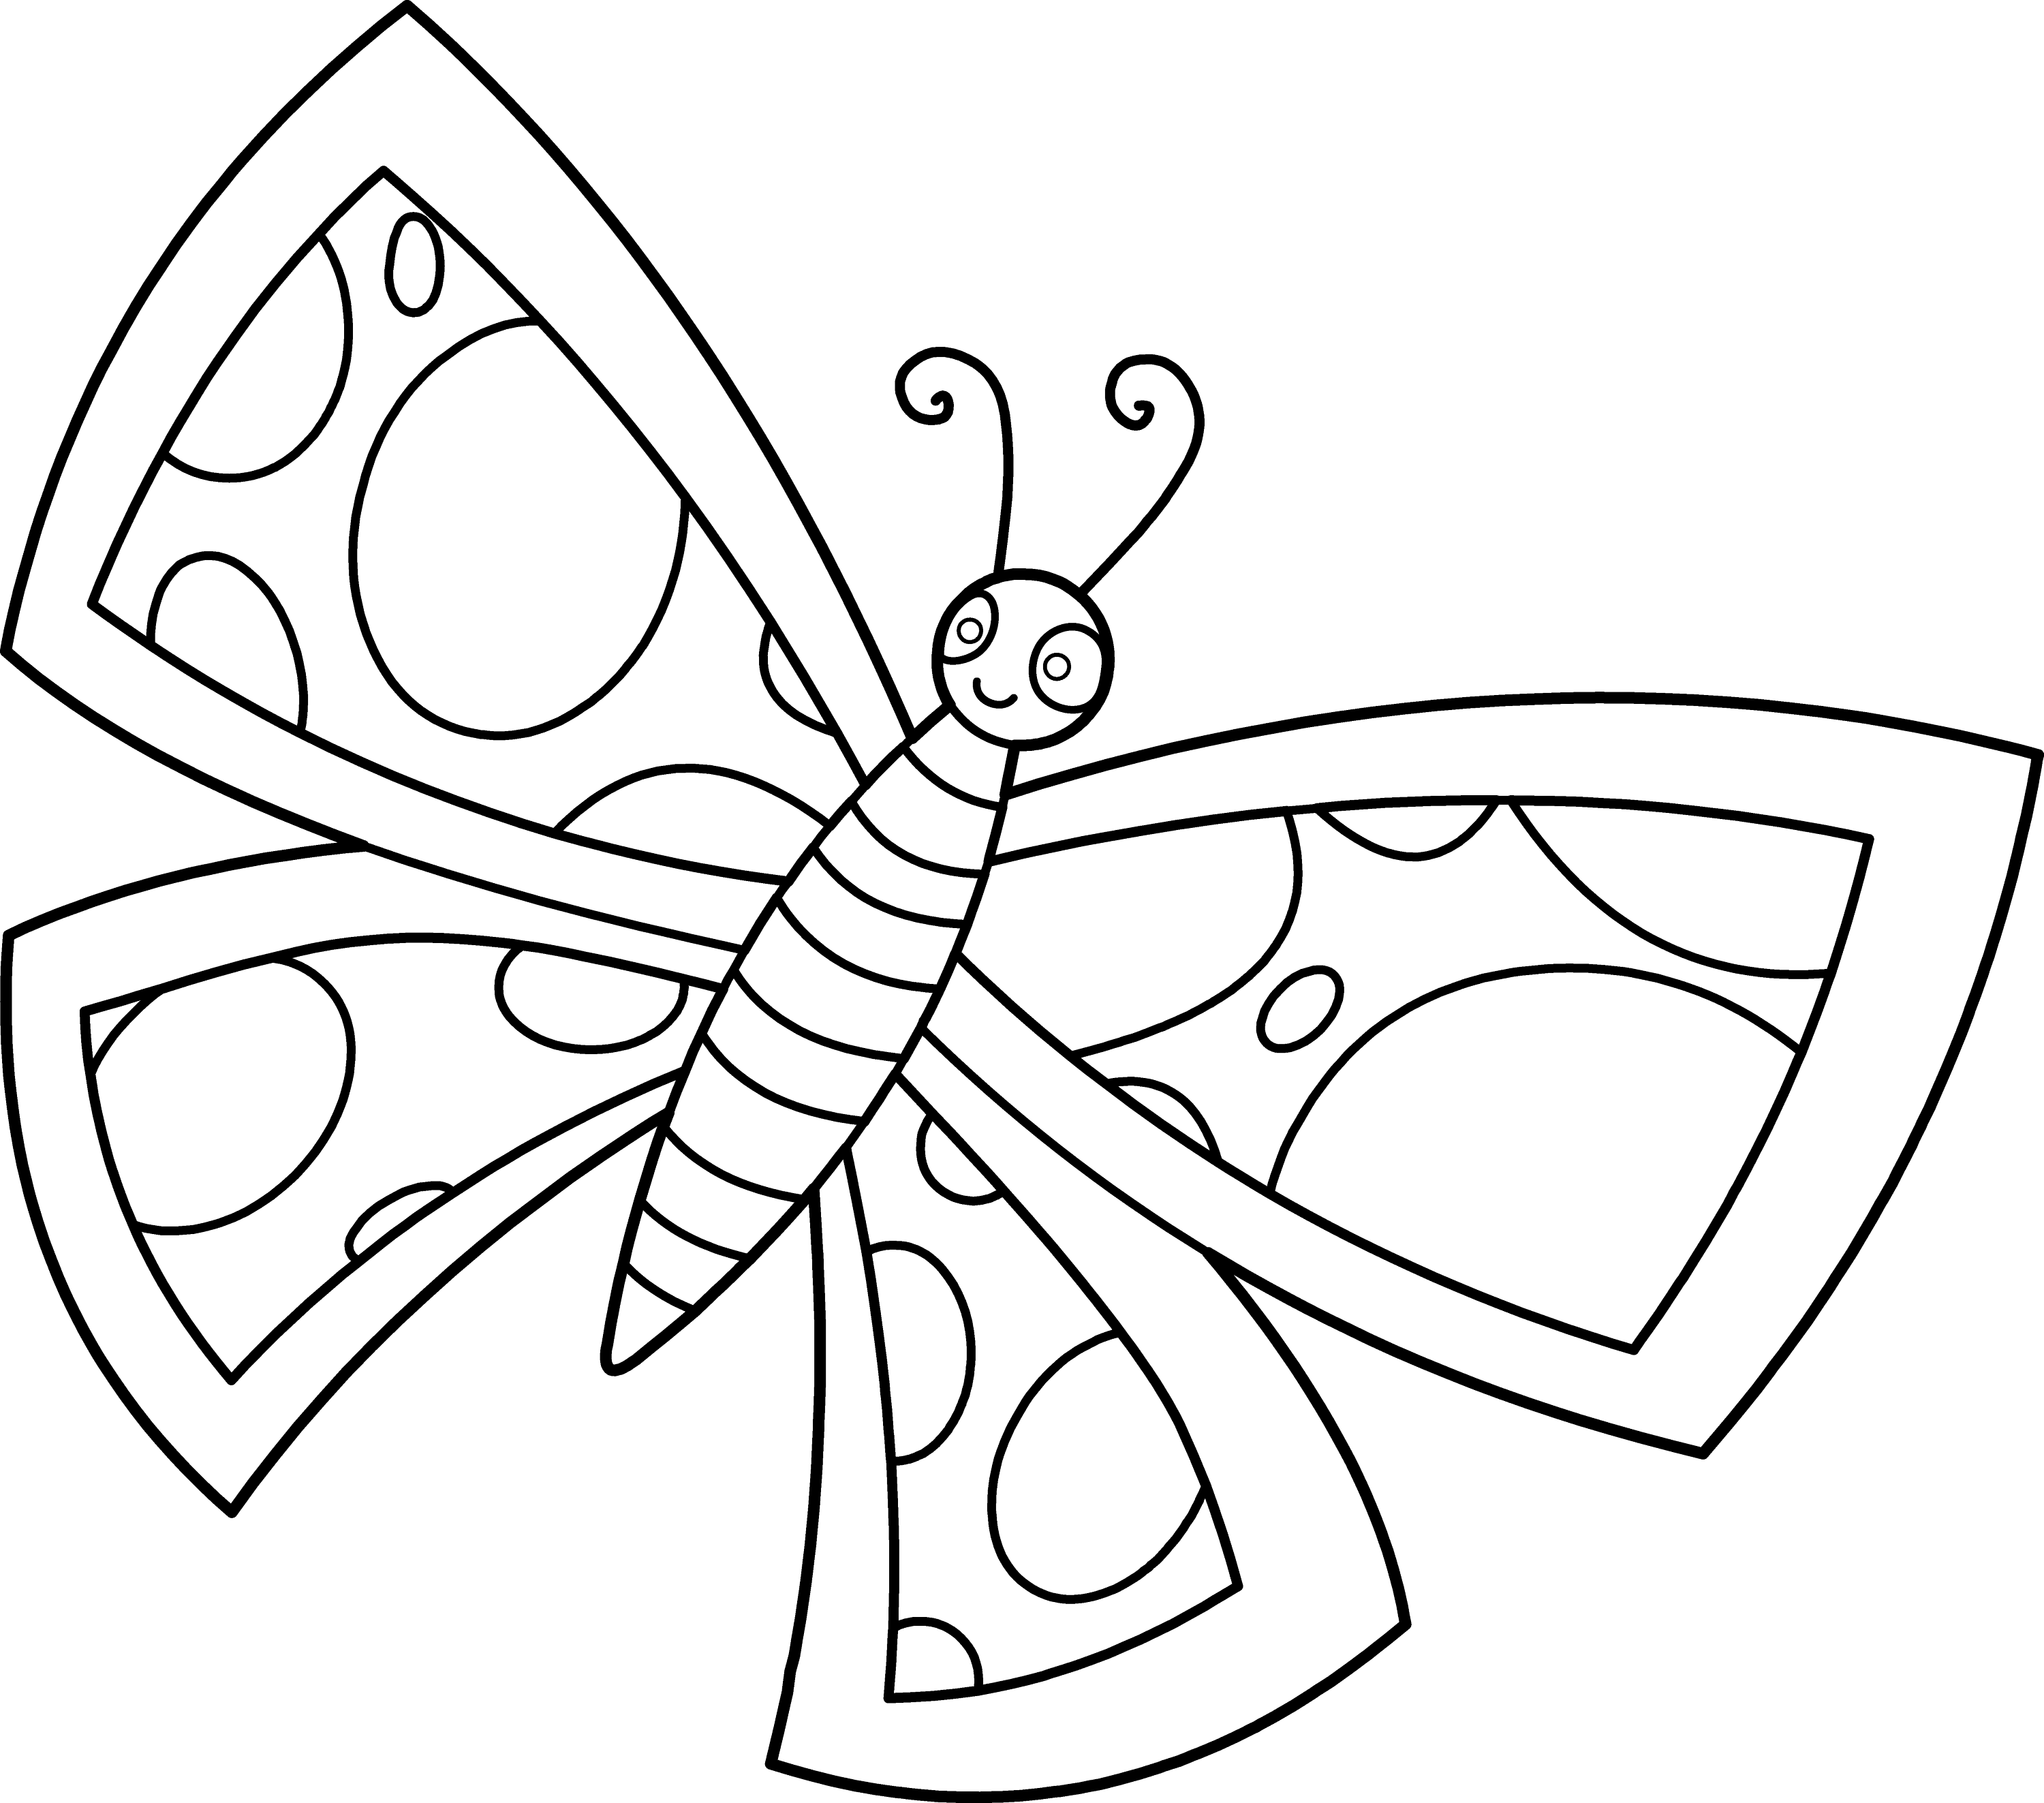 Раскраска 2 бабочки. Бабочка раскраска для детей. Бабочка раскраска для малышей. Детские раскраски бабочки. Бабочка картинка для детей раскраска.